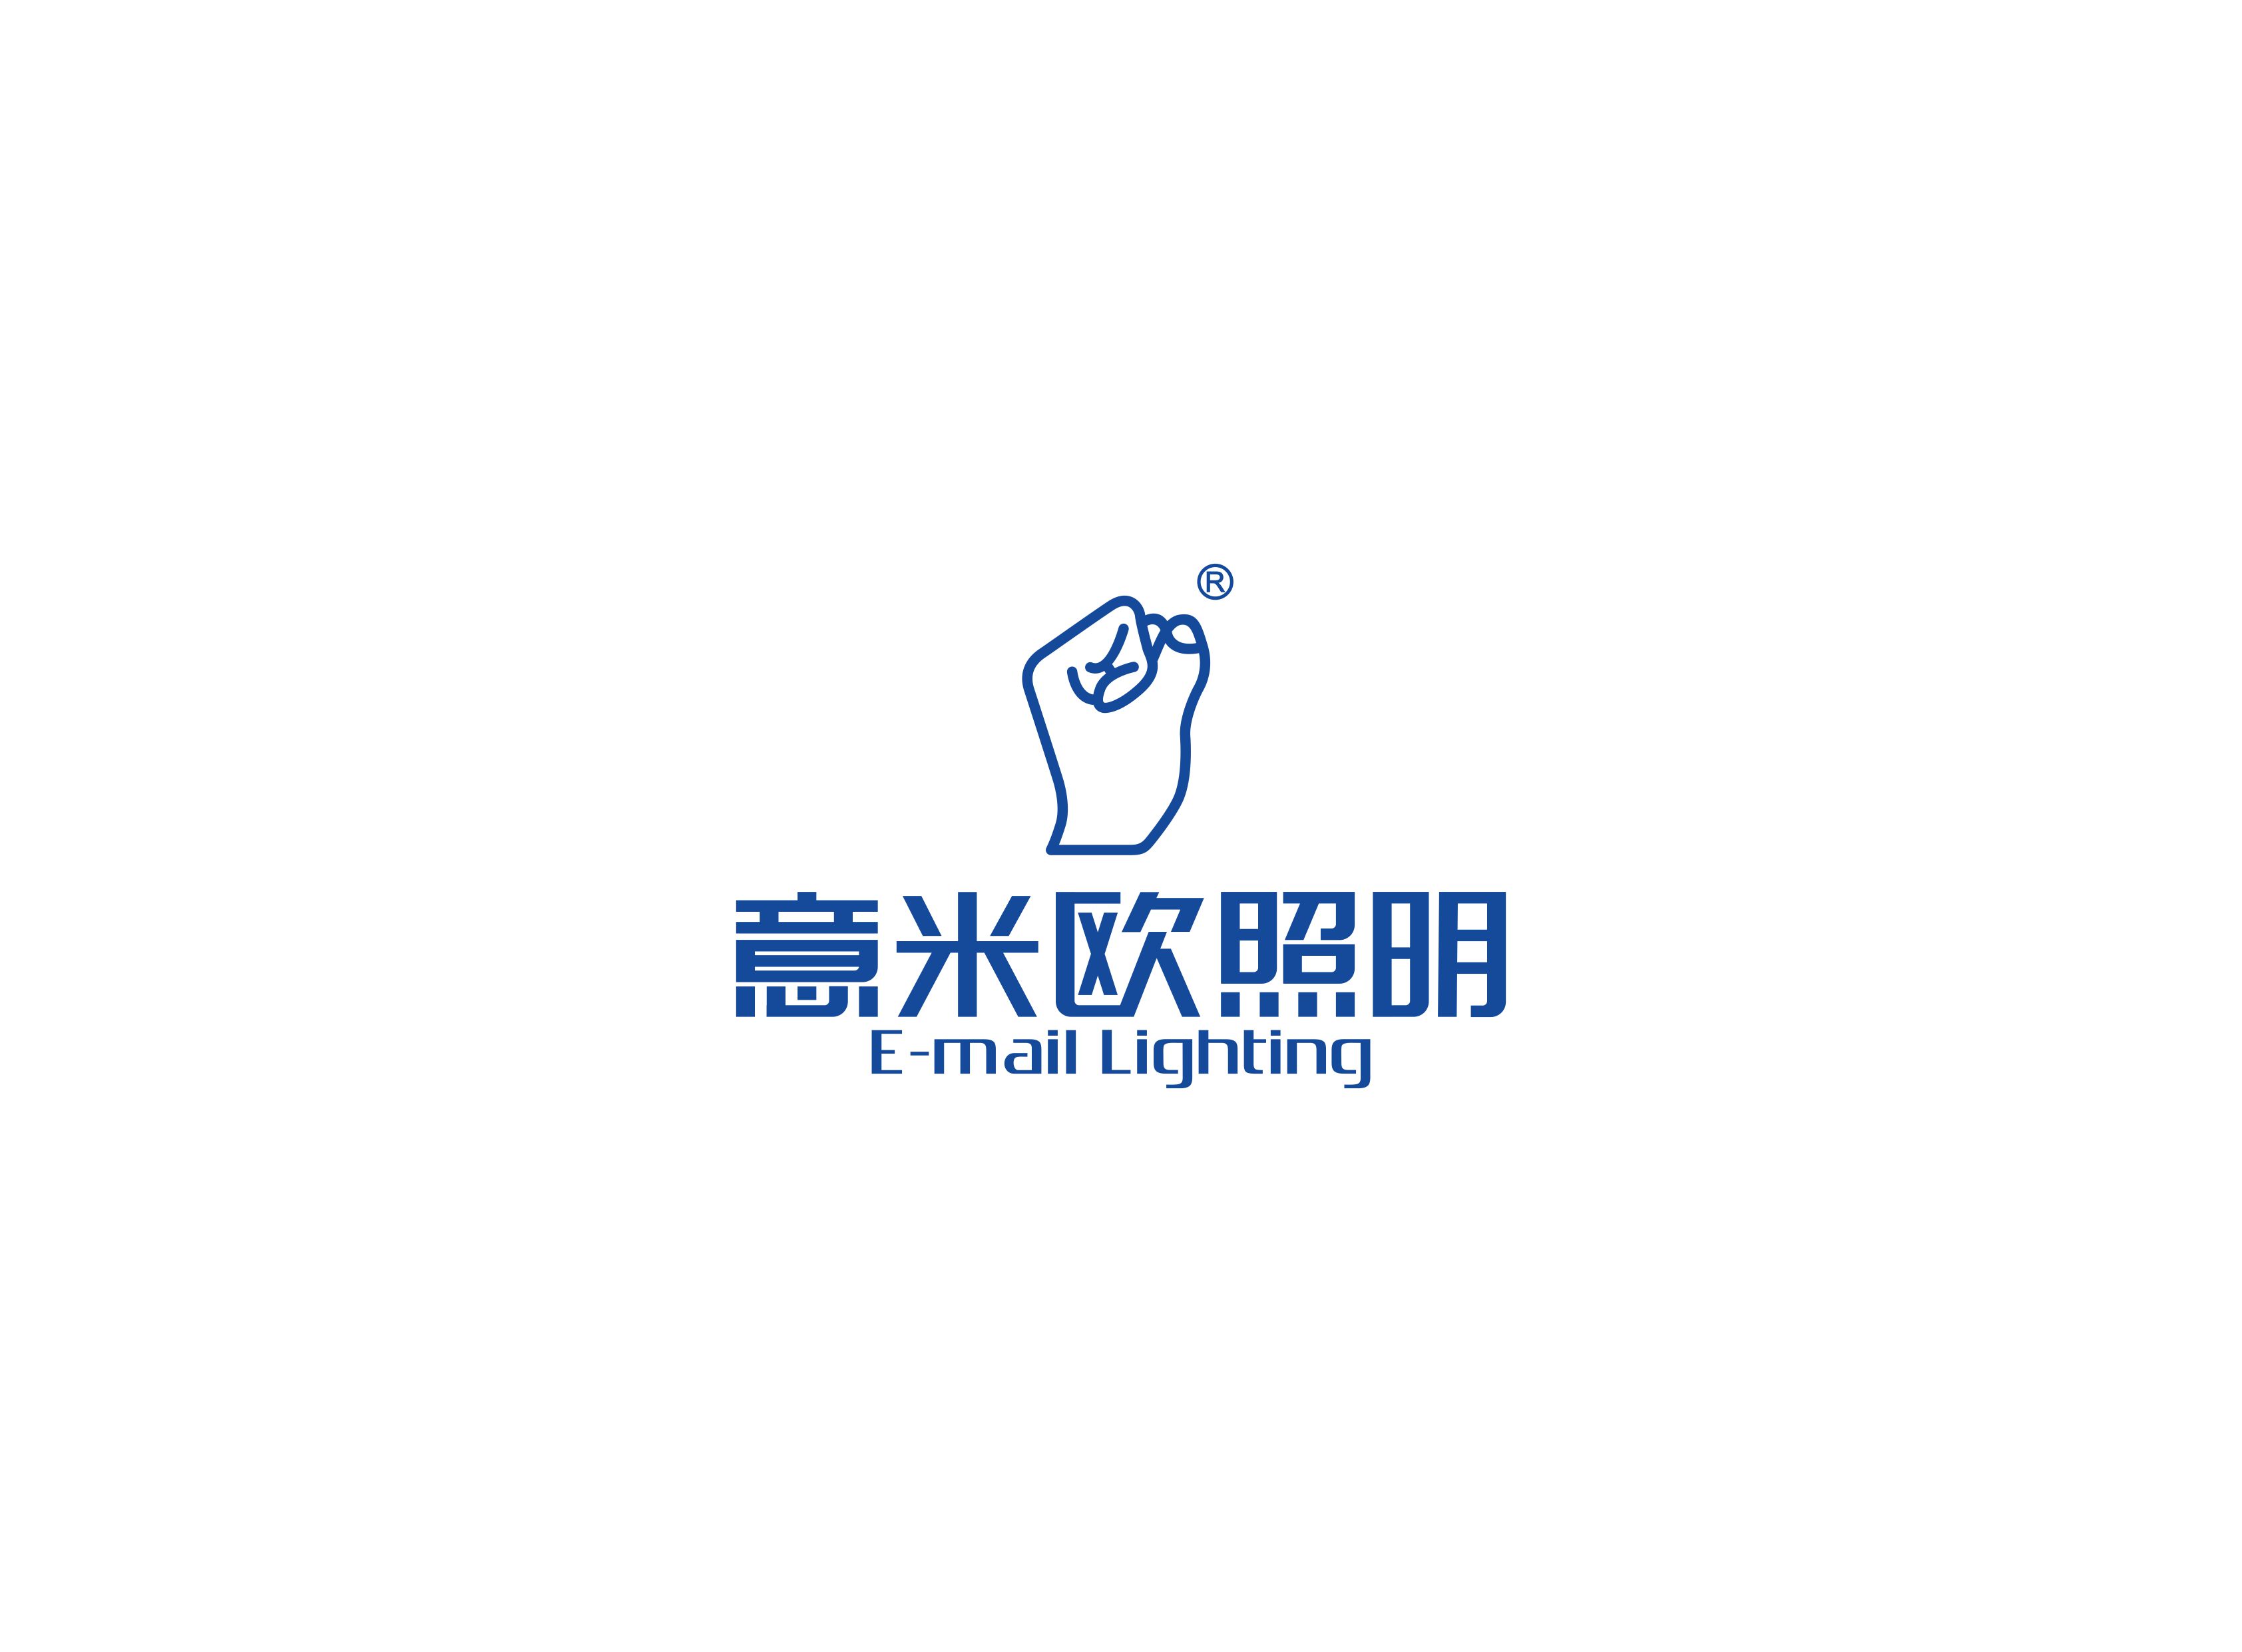 Zhongshan E-mail Lighting Co., Ltd.